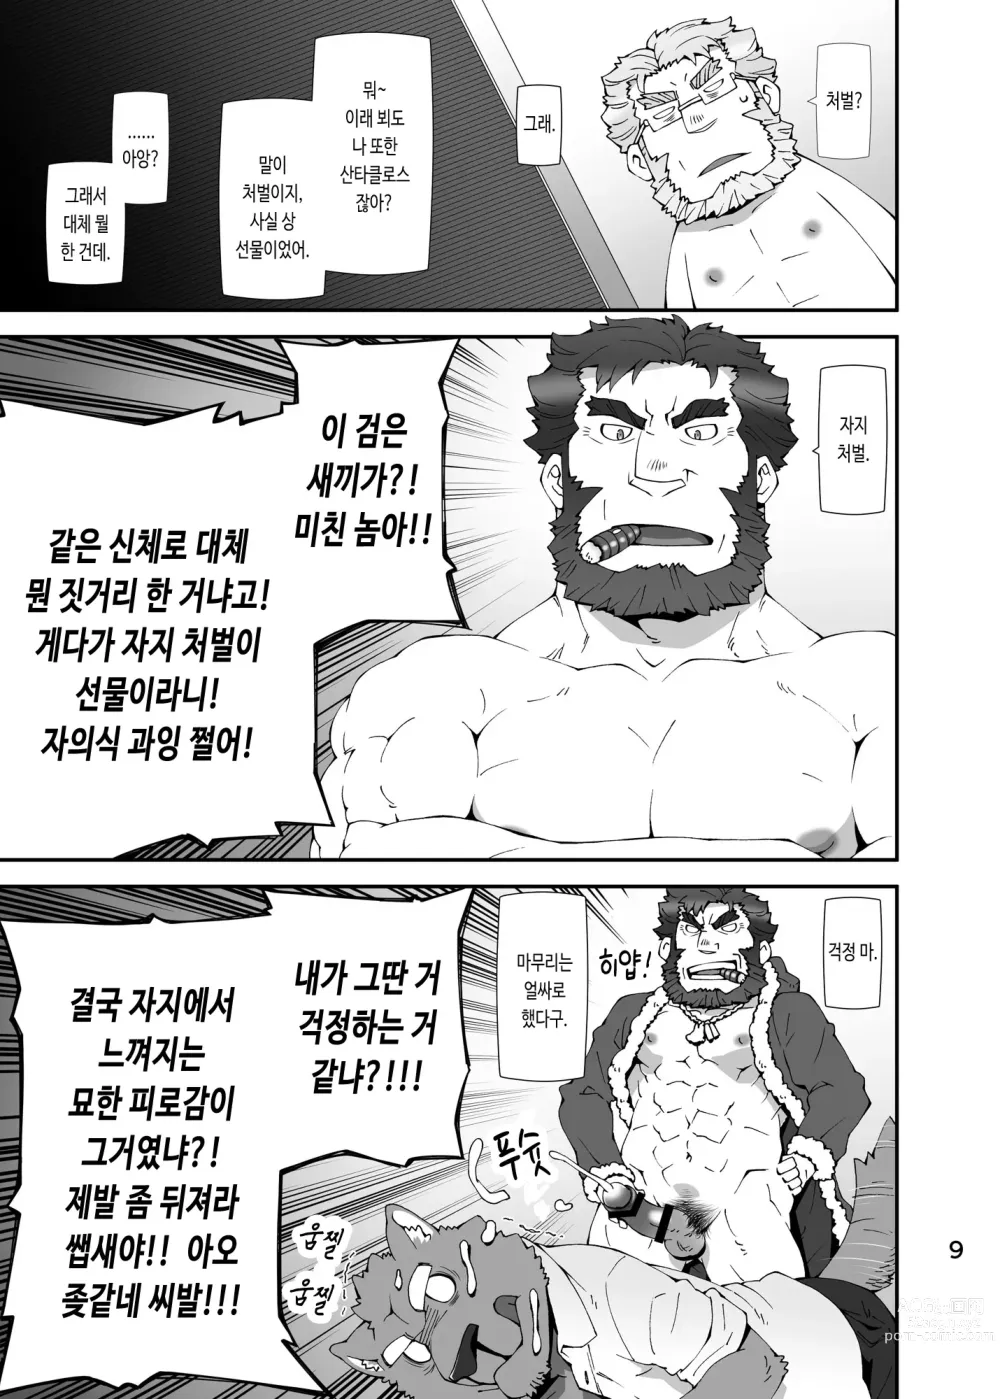 Page 8 of doujinshi 도방서를 하고 싶어 하는 피처폰 아저씨의 망상 책